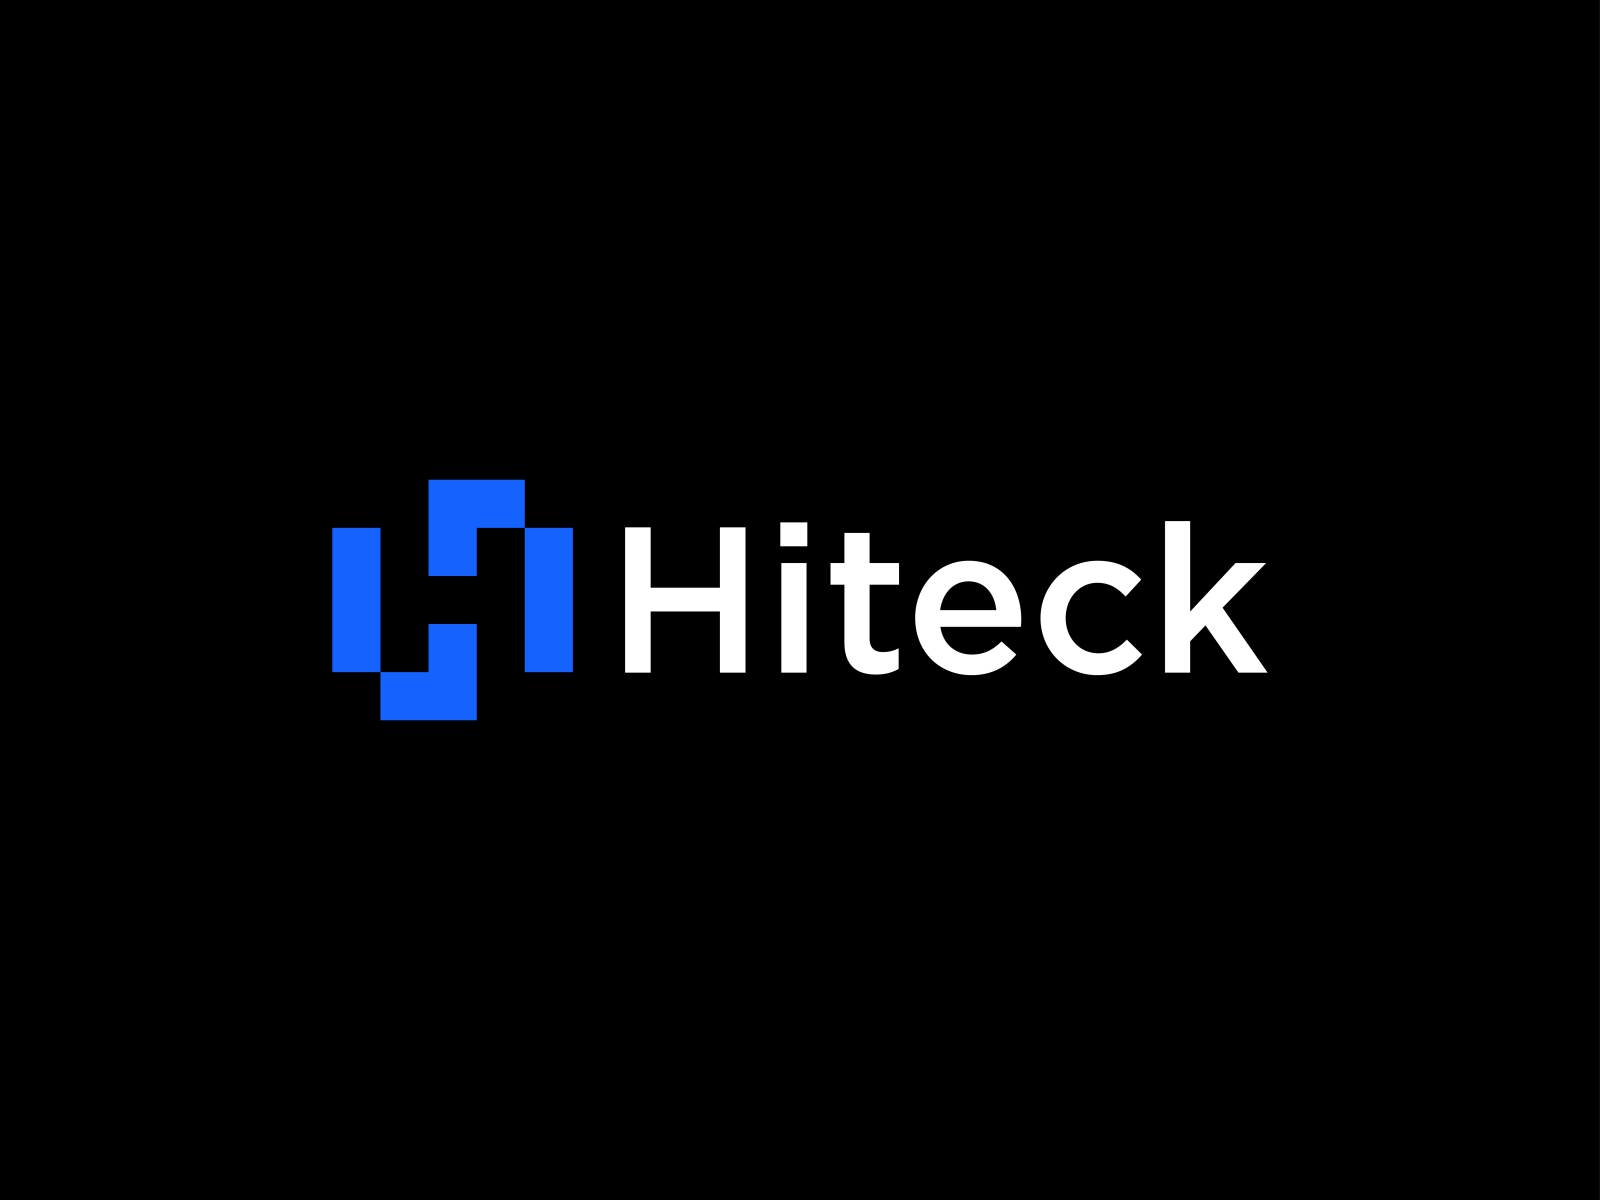 Hiteck Logo Mark by MD. PERVEZ HASAN RUBEL on Dribbble